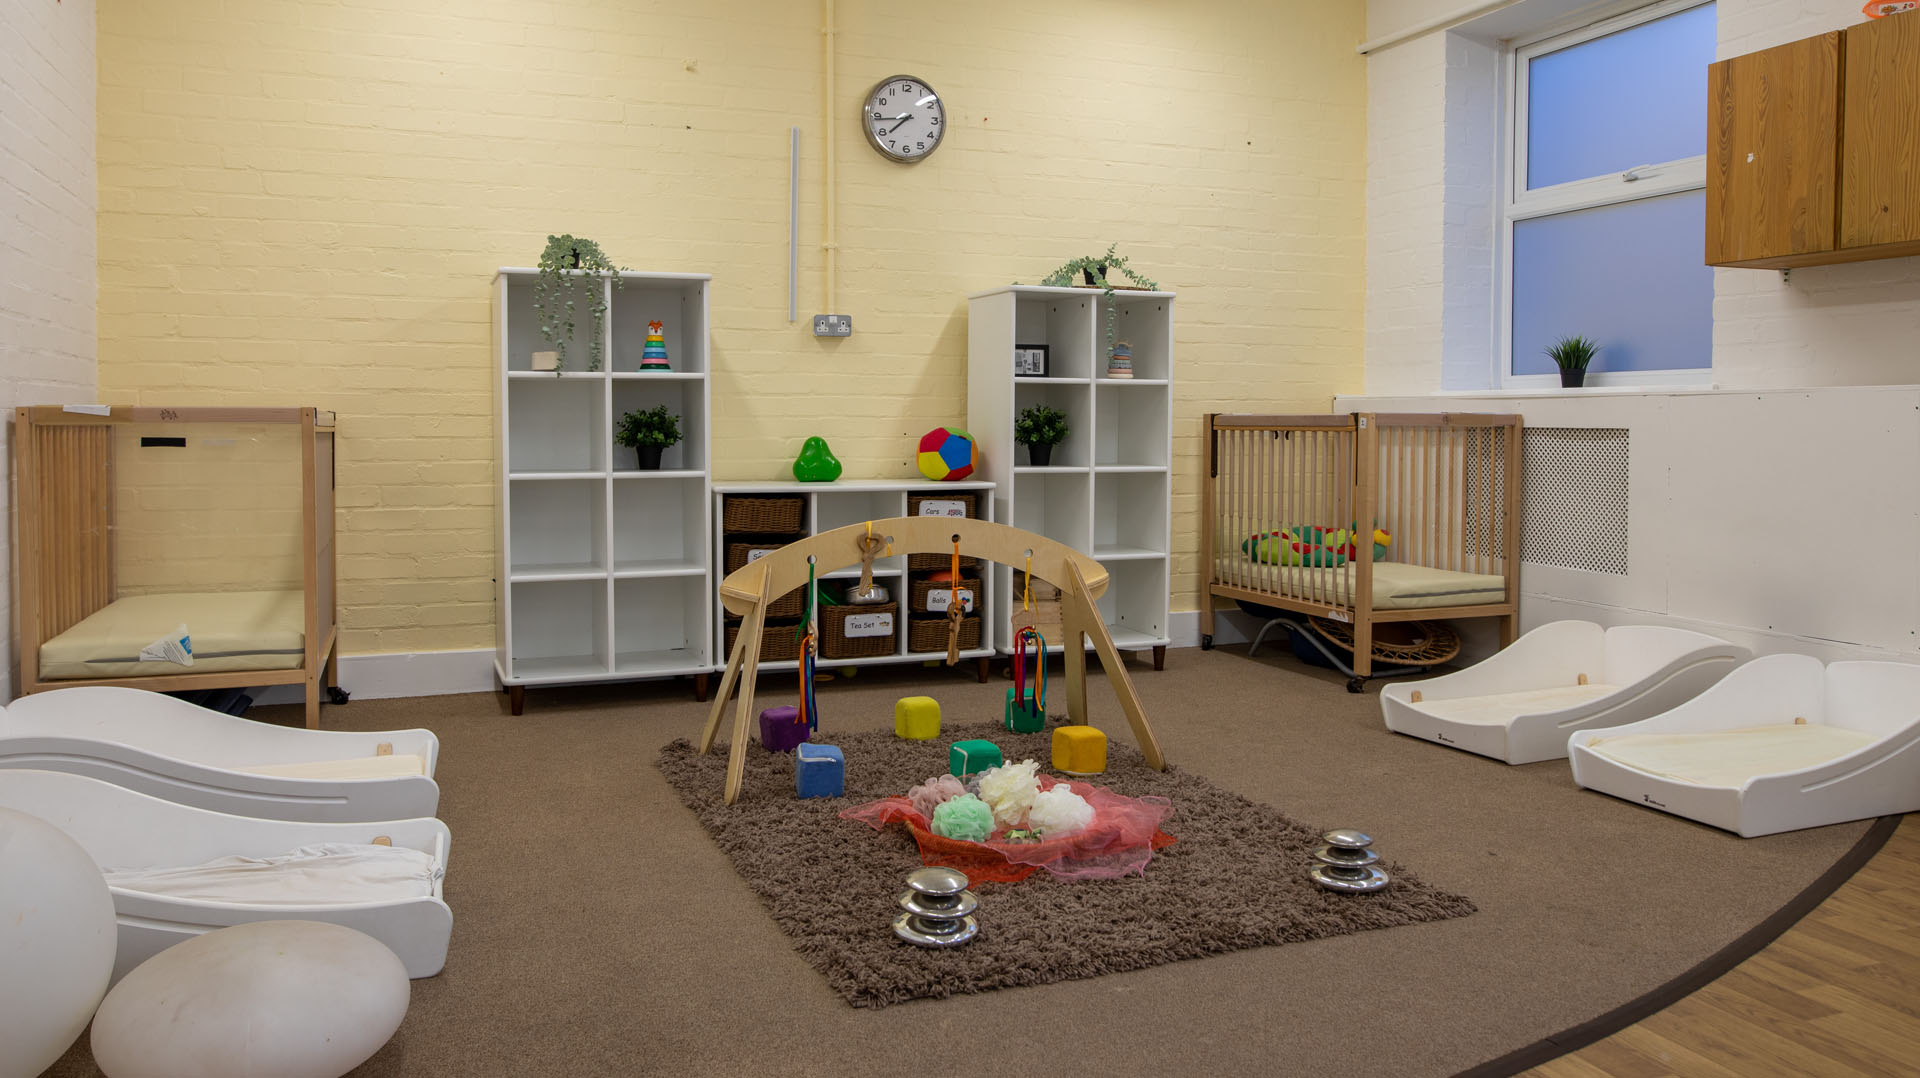 Maythorne Cottages Day Nursery and Preschool room